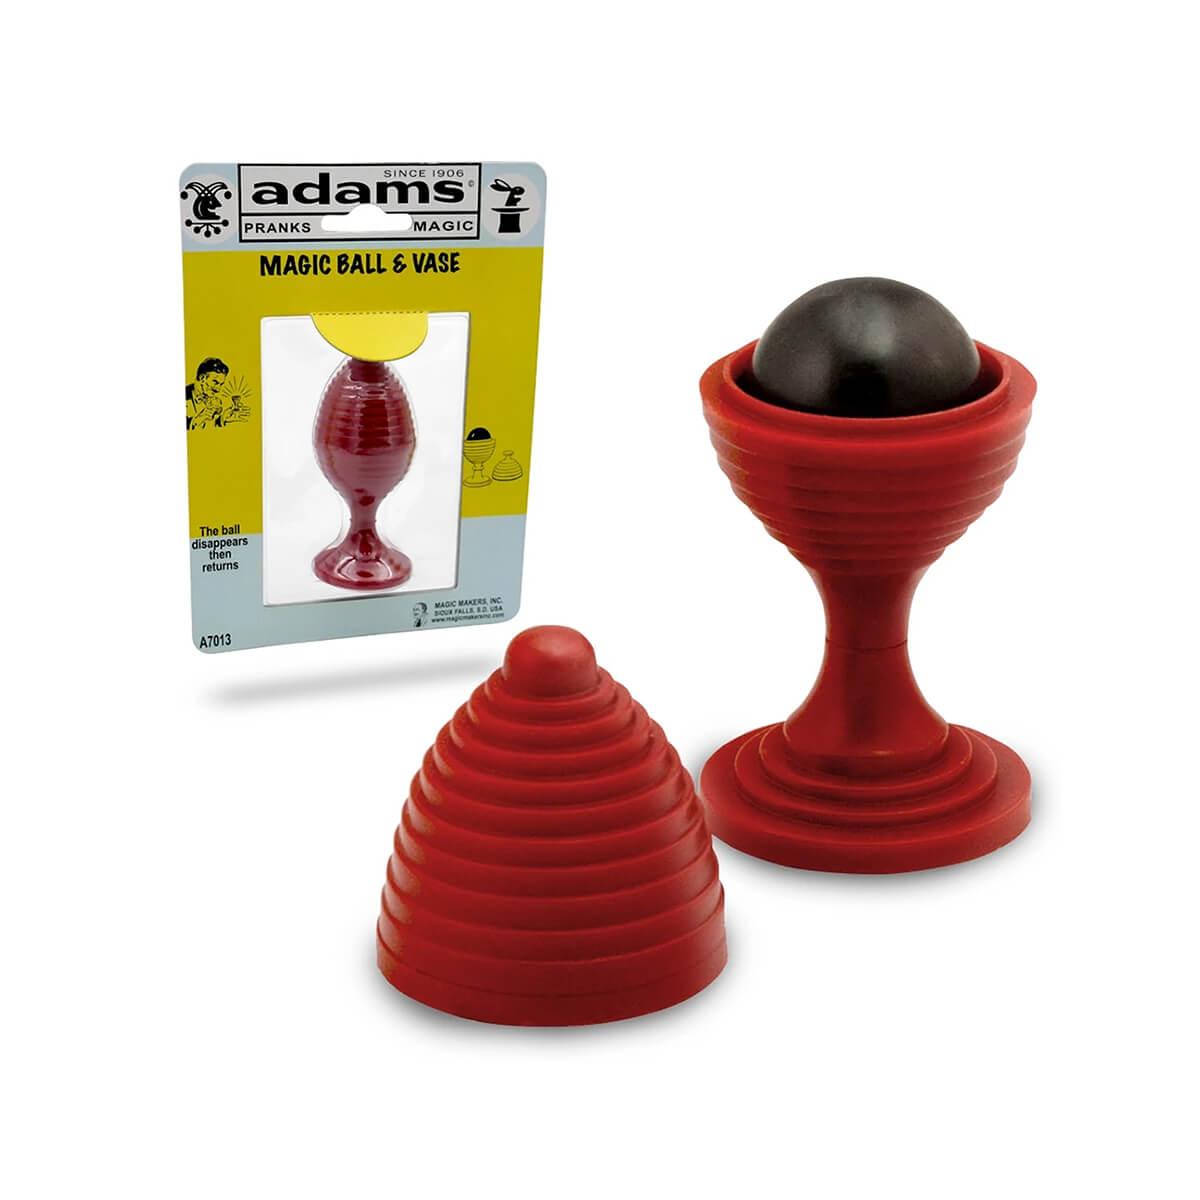  Magic Ball & Vase Trick Toy